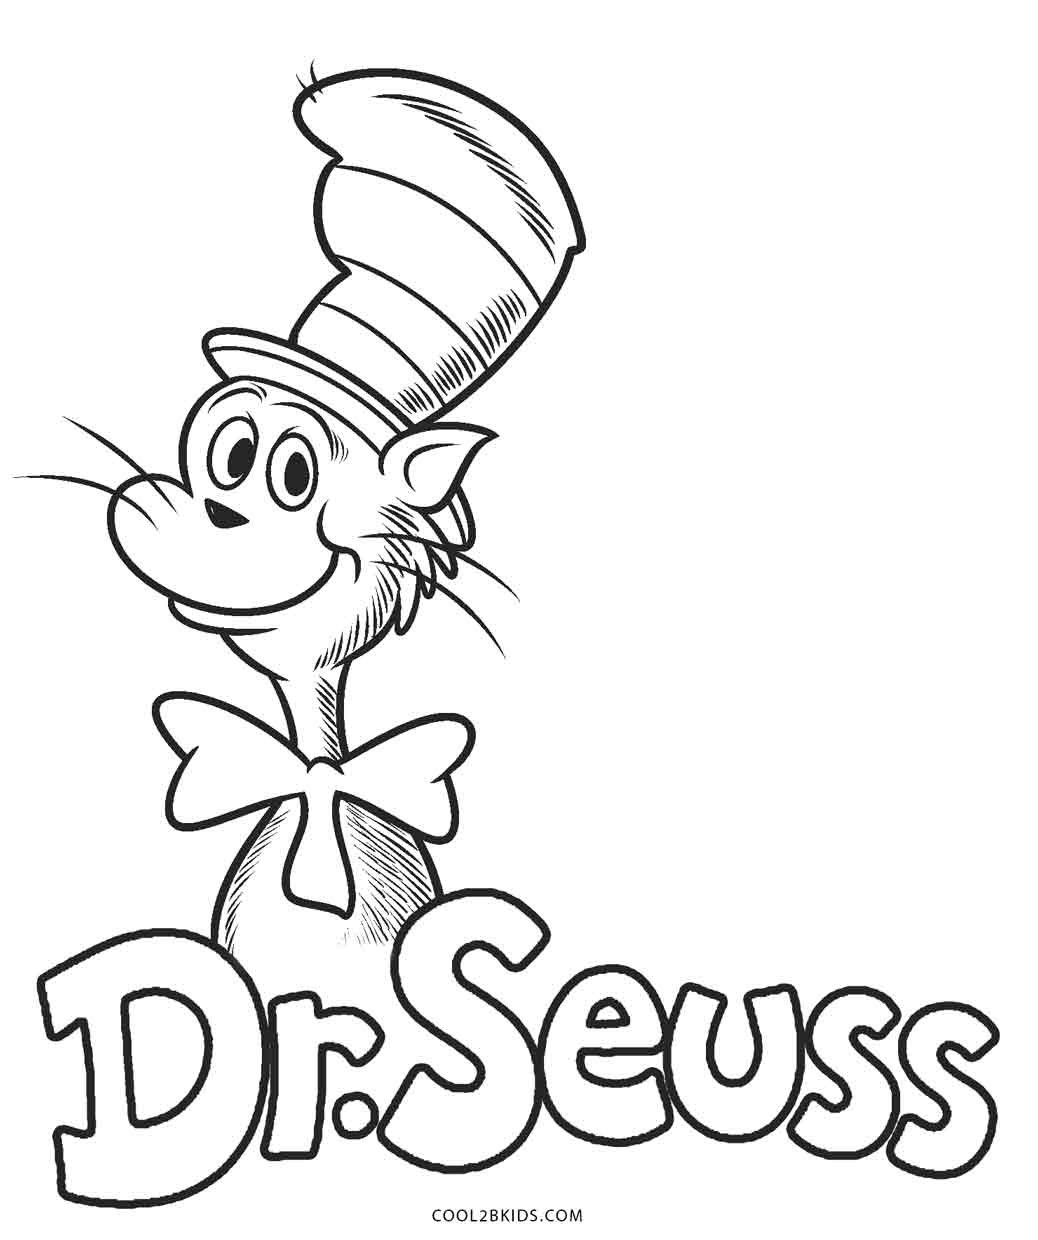 Dr. Seuss Preschool Coloring Sheets
 Free Printable Dr Seuss Coloring Pages For Kids